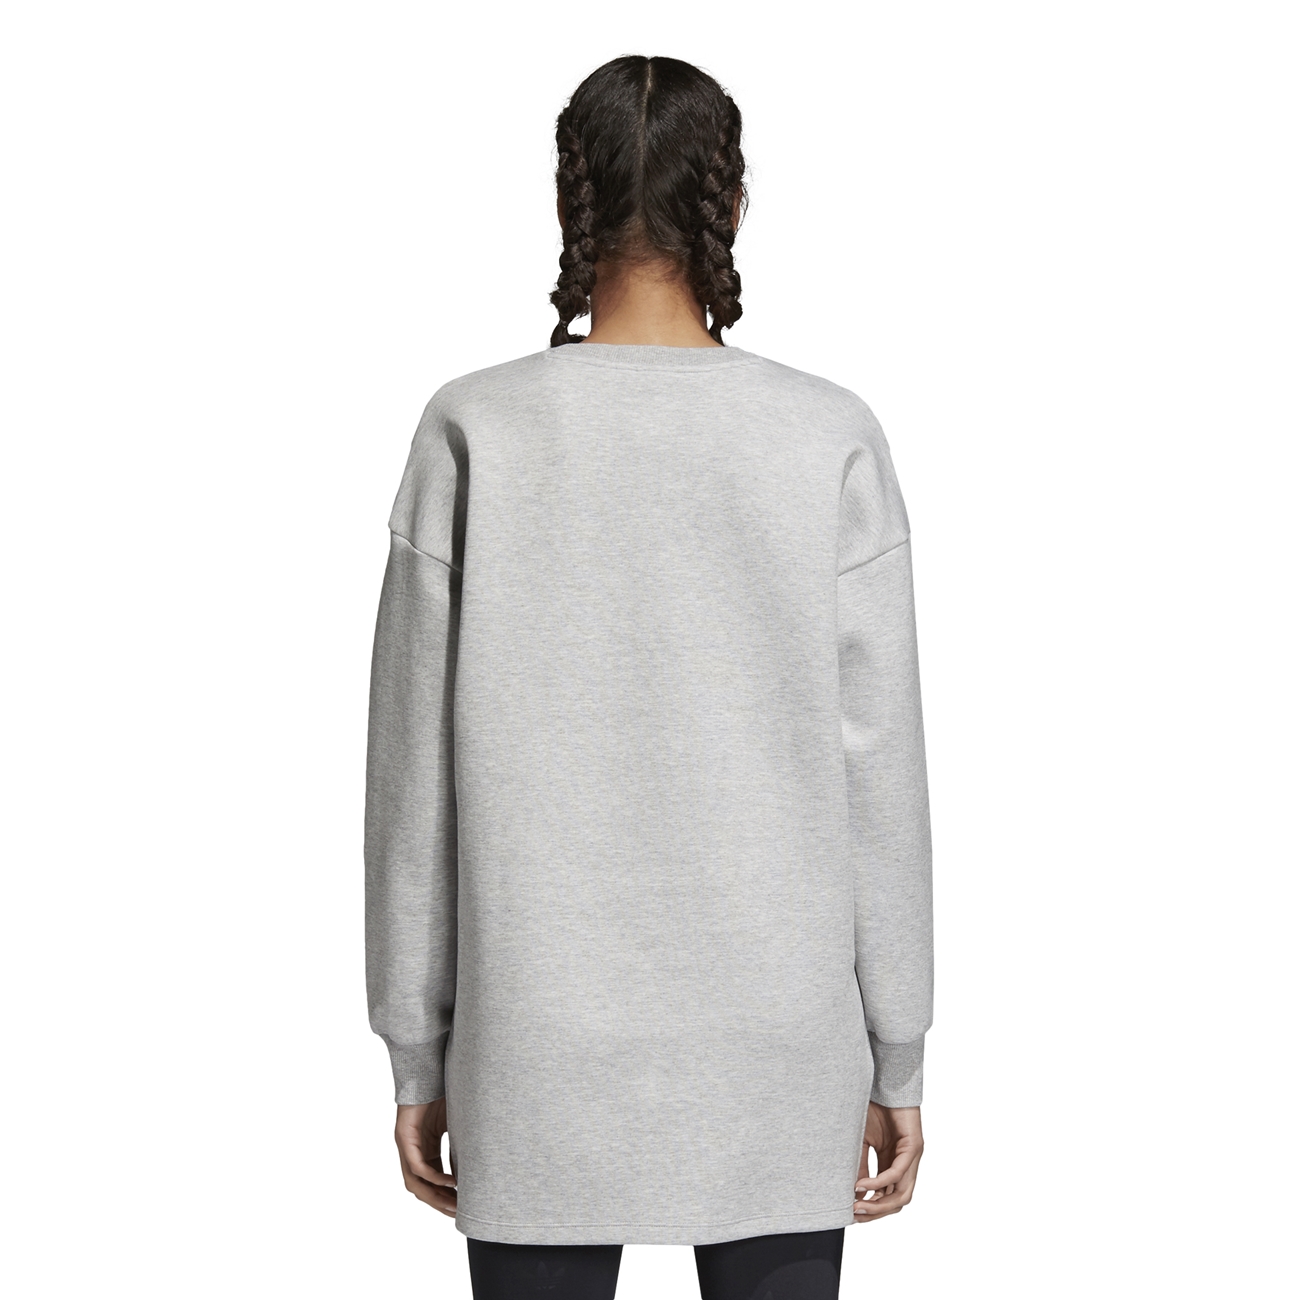 Adidas Originals Sweatshirt Long  Sleeve manelsanchez com